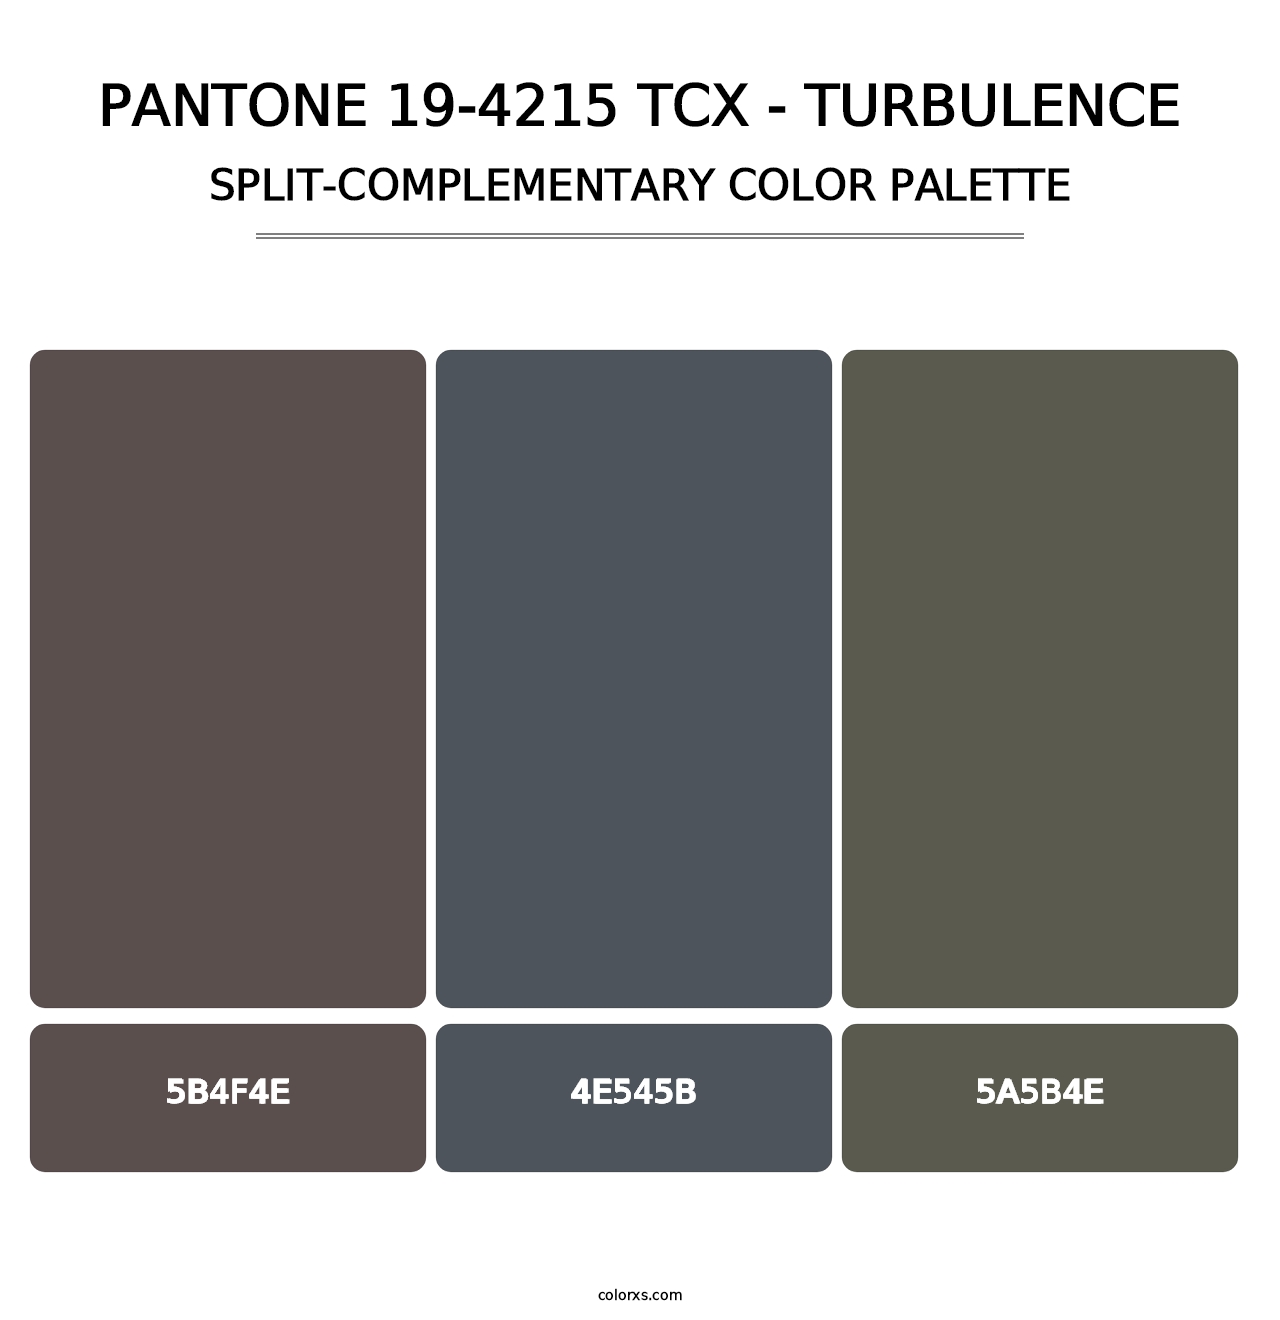 PANTONE 19-4215 TCX - Turbulence - Split-Complementary Color Palette